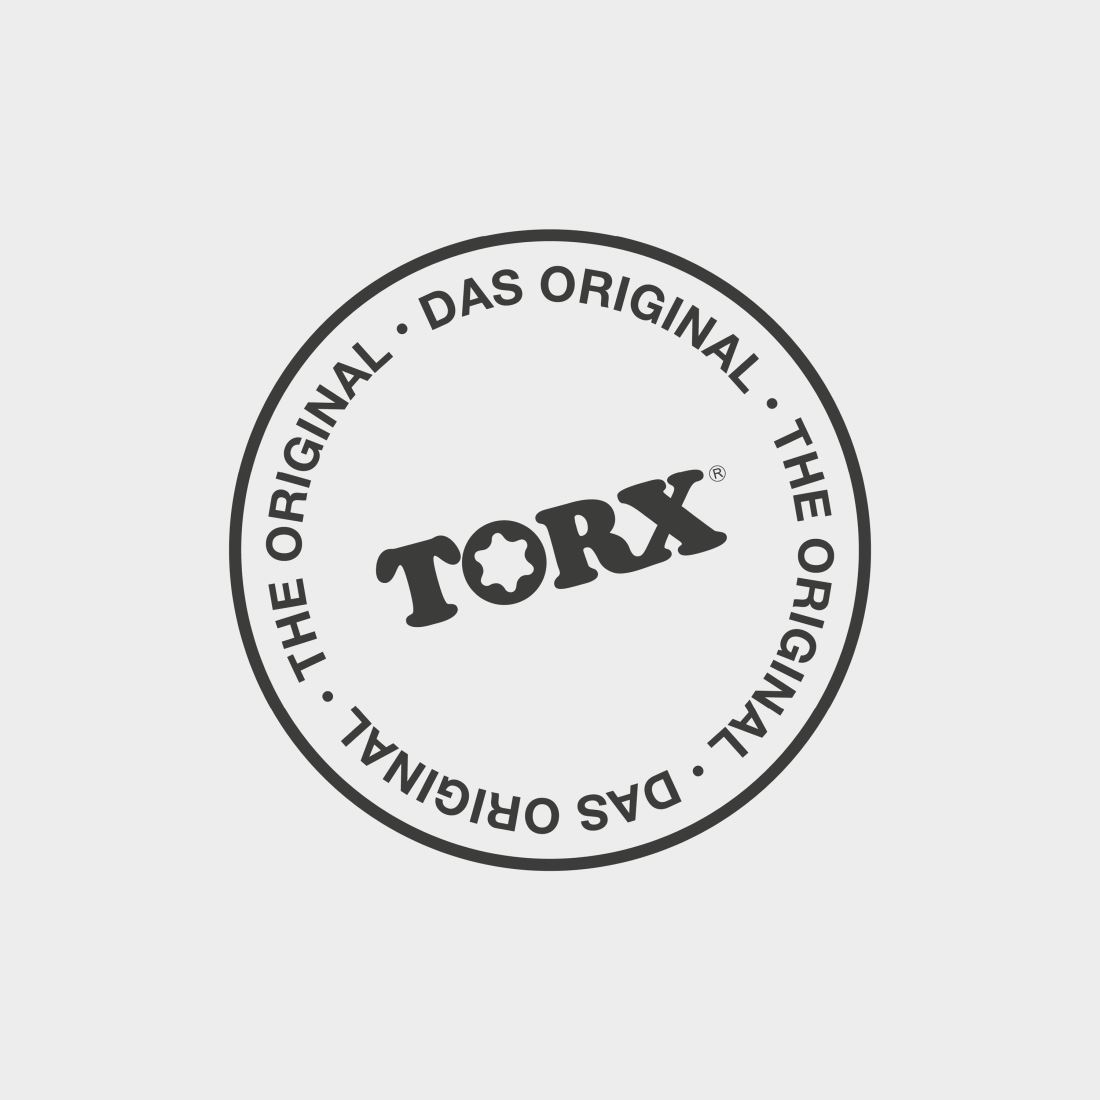 TORX® 73073 Winkelschraubendreher (Verchromt) TX10, mit Kugelkopf & Black Tip — Made in Germany